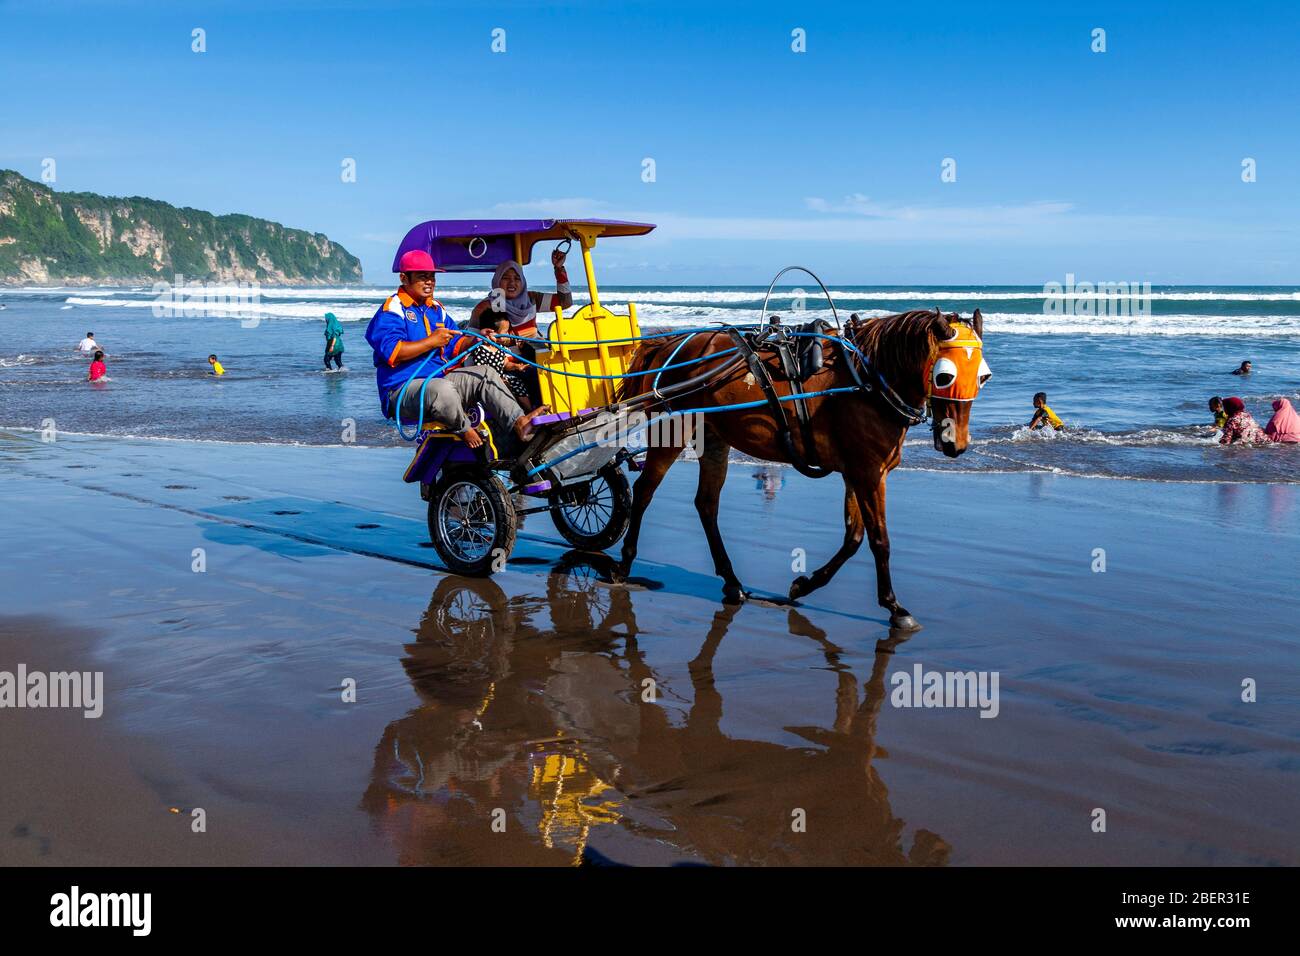 Indonesian People Enjoying A Horse and Carriage Ride On Parangtritis Beach, Yogyakarta, Indonesia. Stock Photo